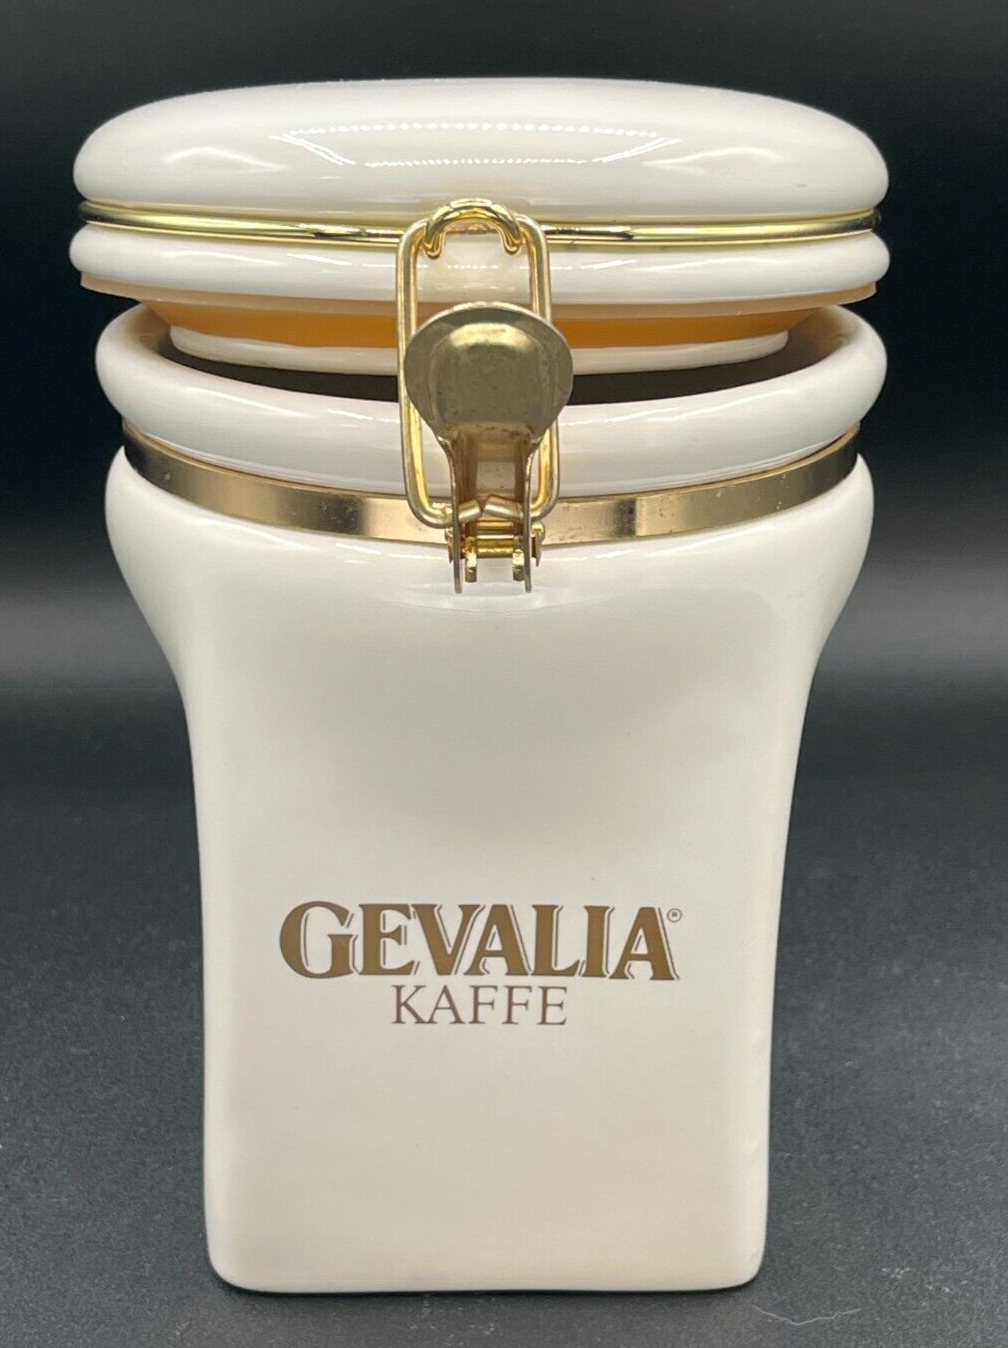 Gevalia Kaffe Coffee Storage Canister White Ceramic Air Tite Lock Nice Gold Logo